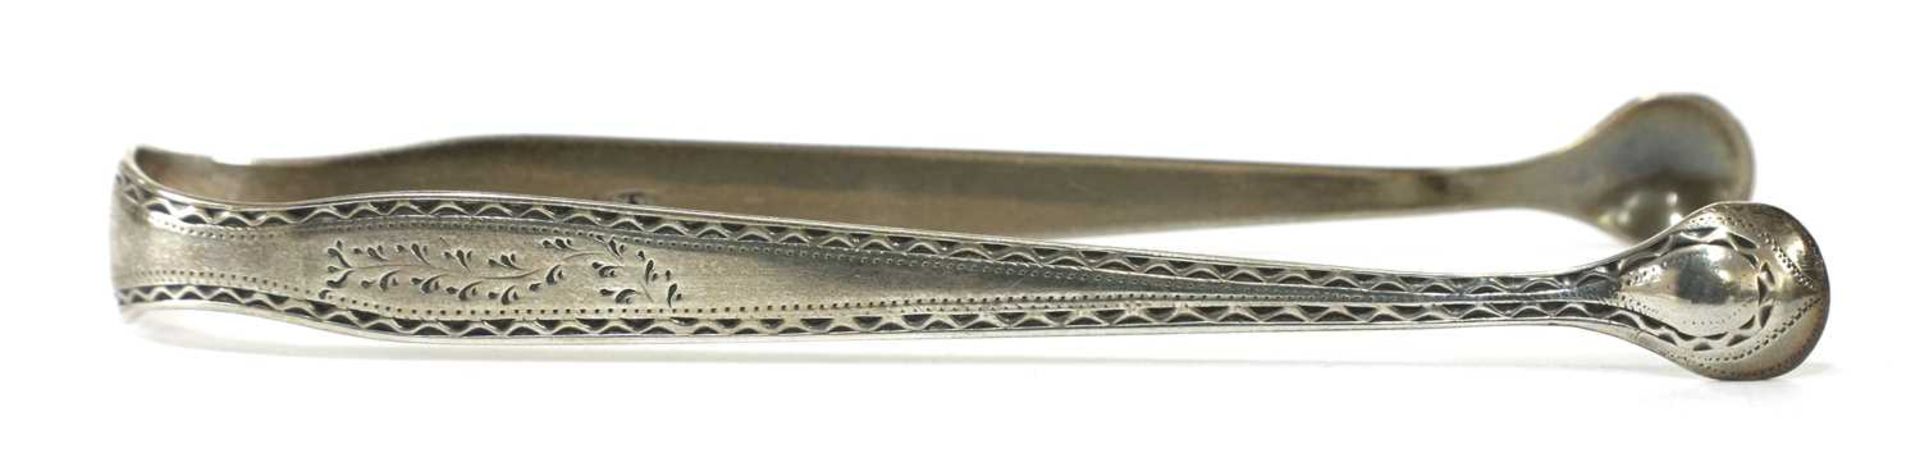 A pair of George III silver sugar tongs, - Image 14 of 33